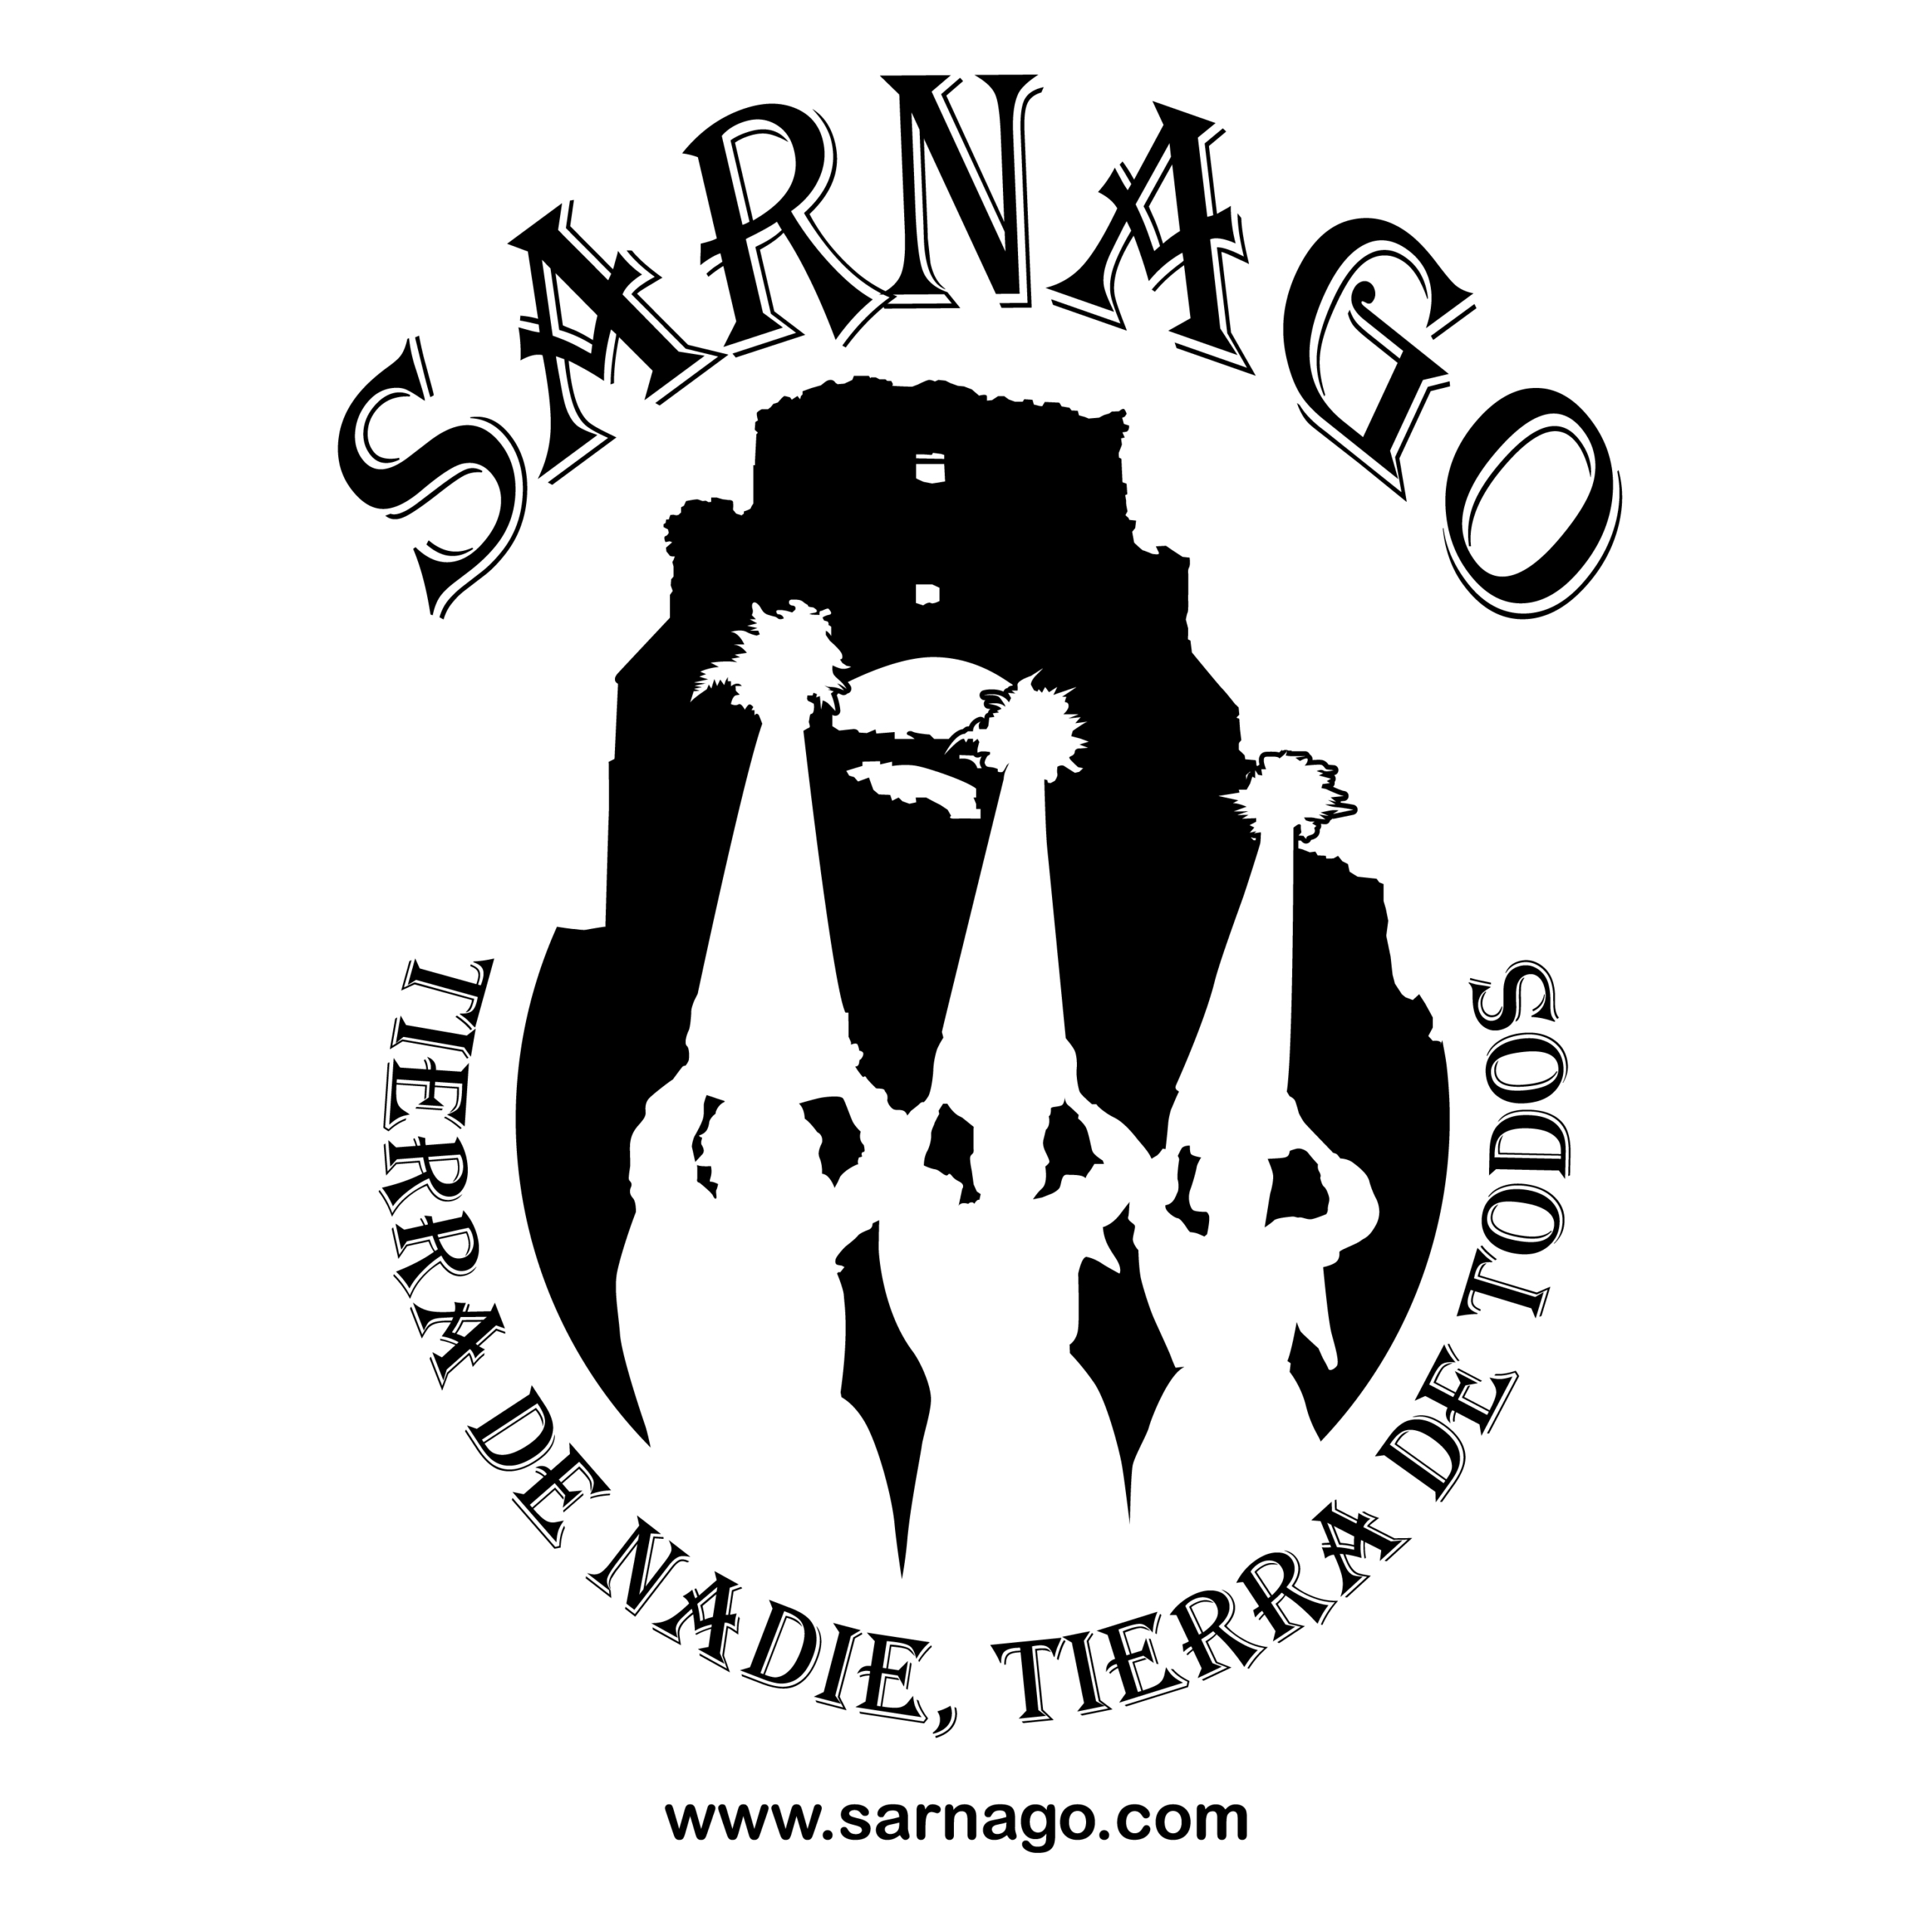 (c) Sarnago.com